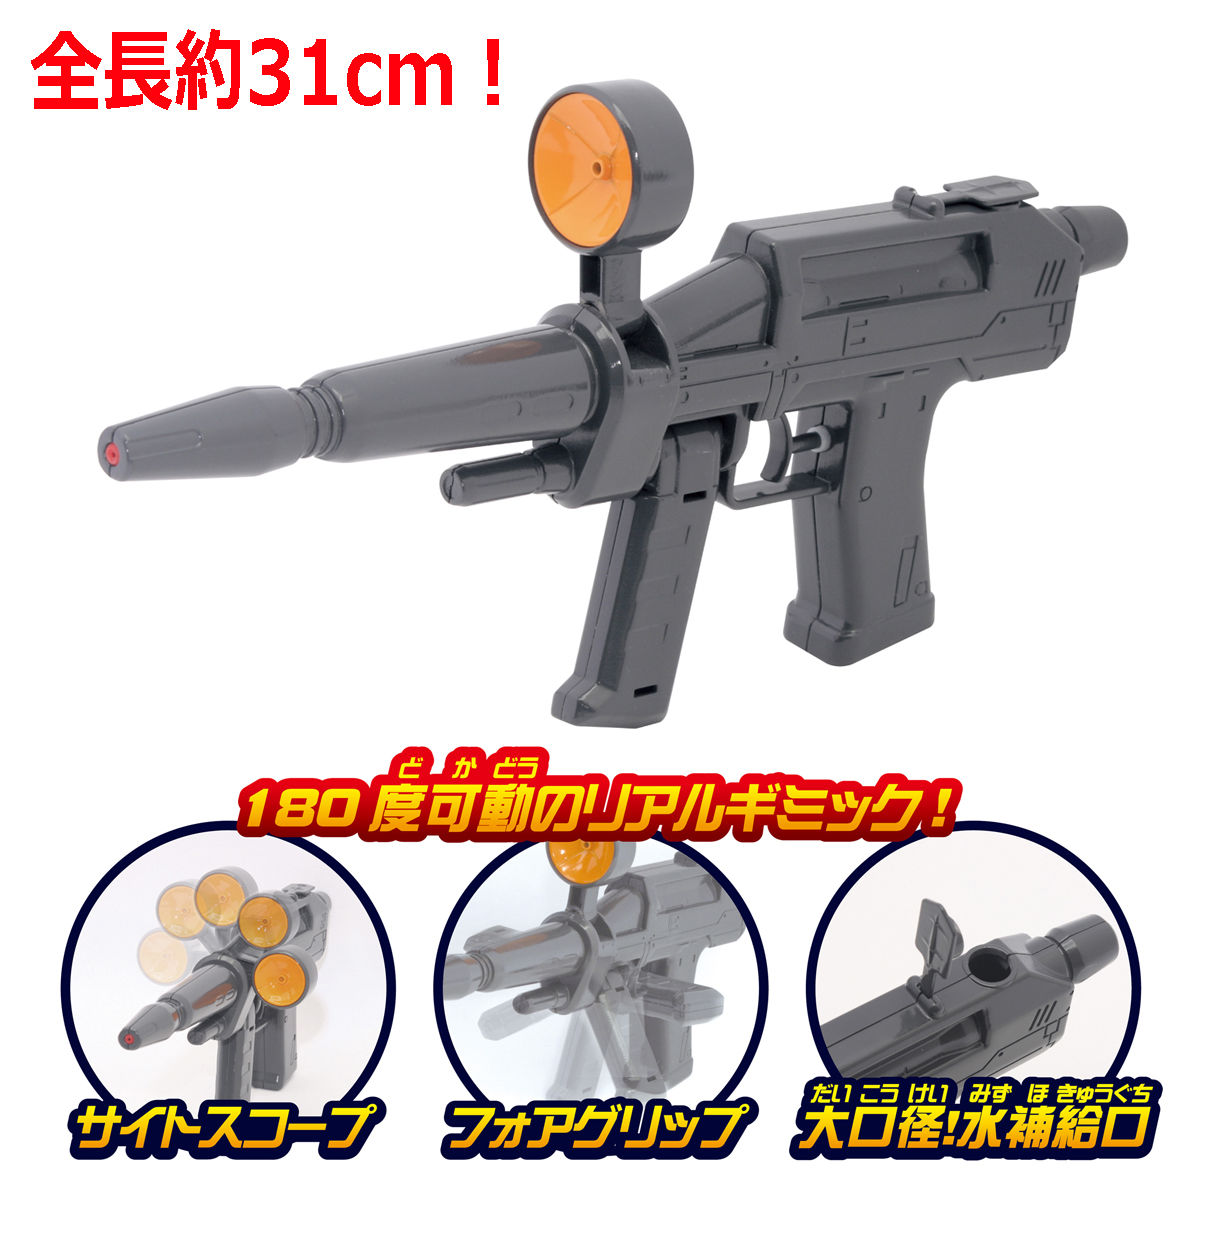 xbr-m-79-07g-beam-rifle-type-water-gun (4)